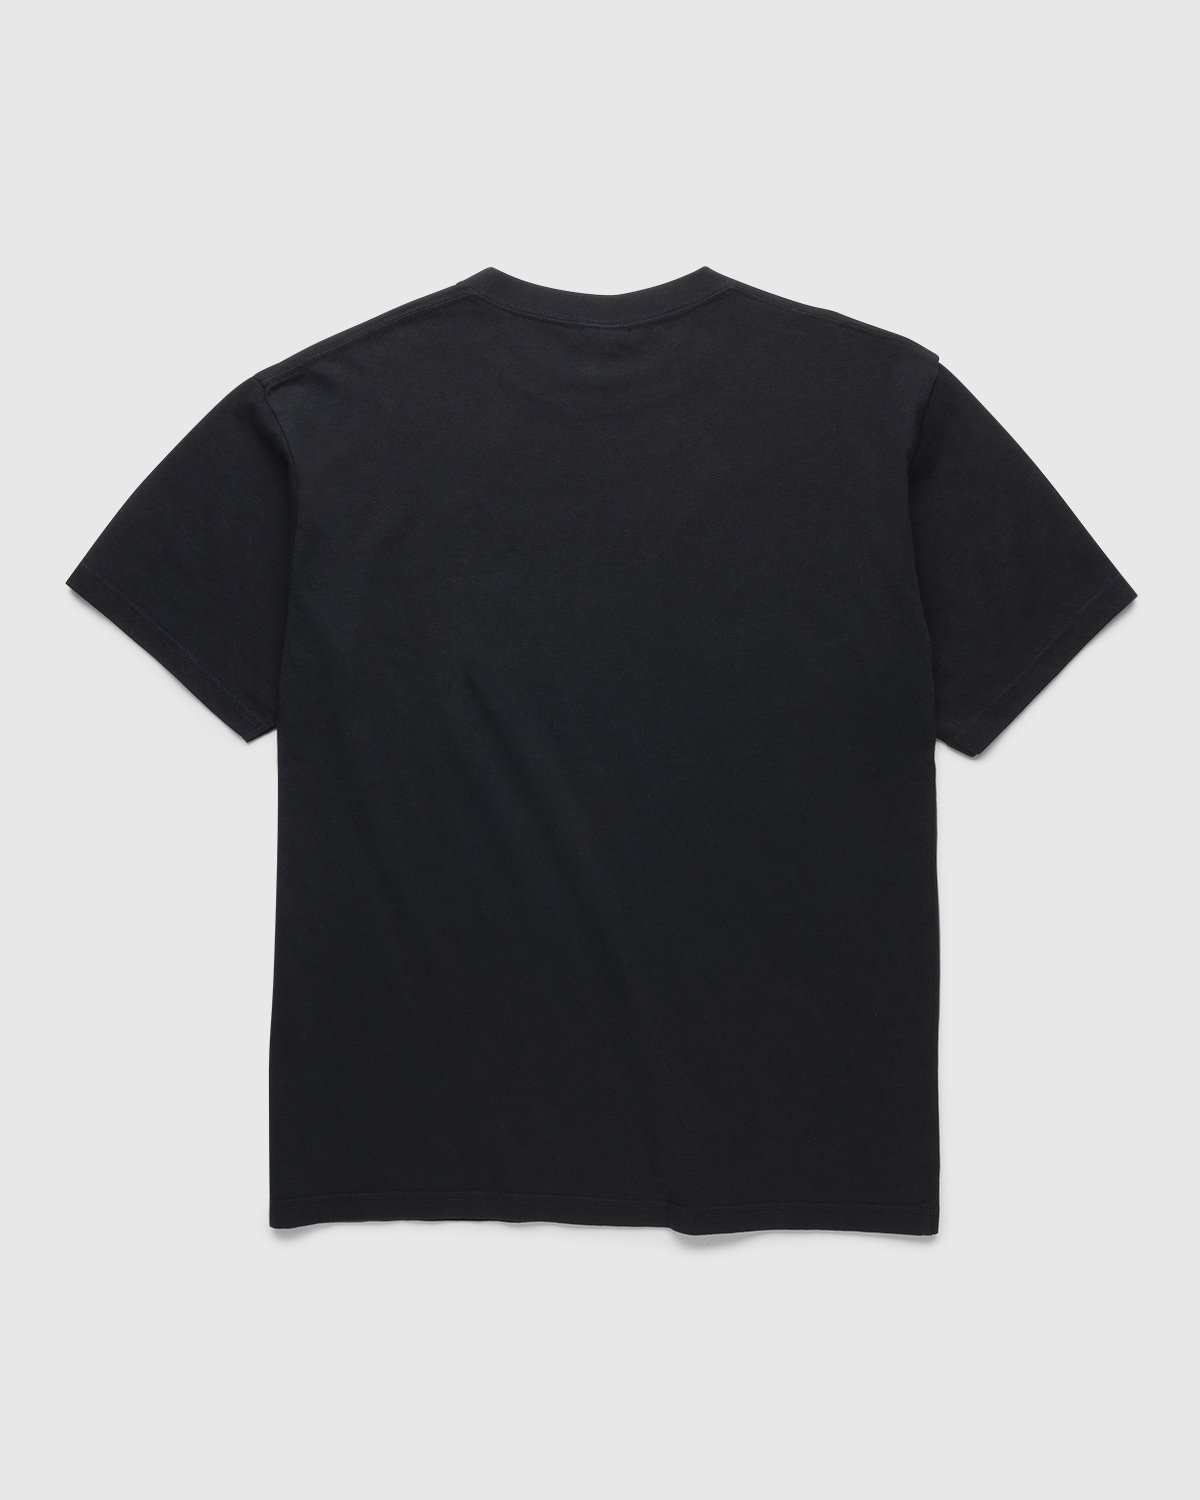 BRAUN x Highsnobiety - TP1 T-Shirt Black - Clothing - Black - Image 2